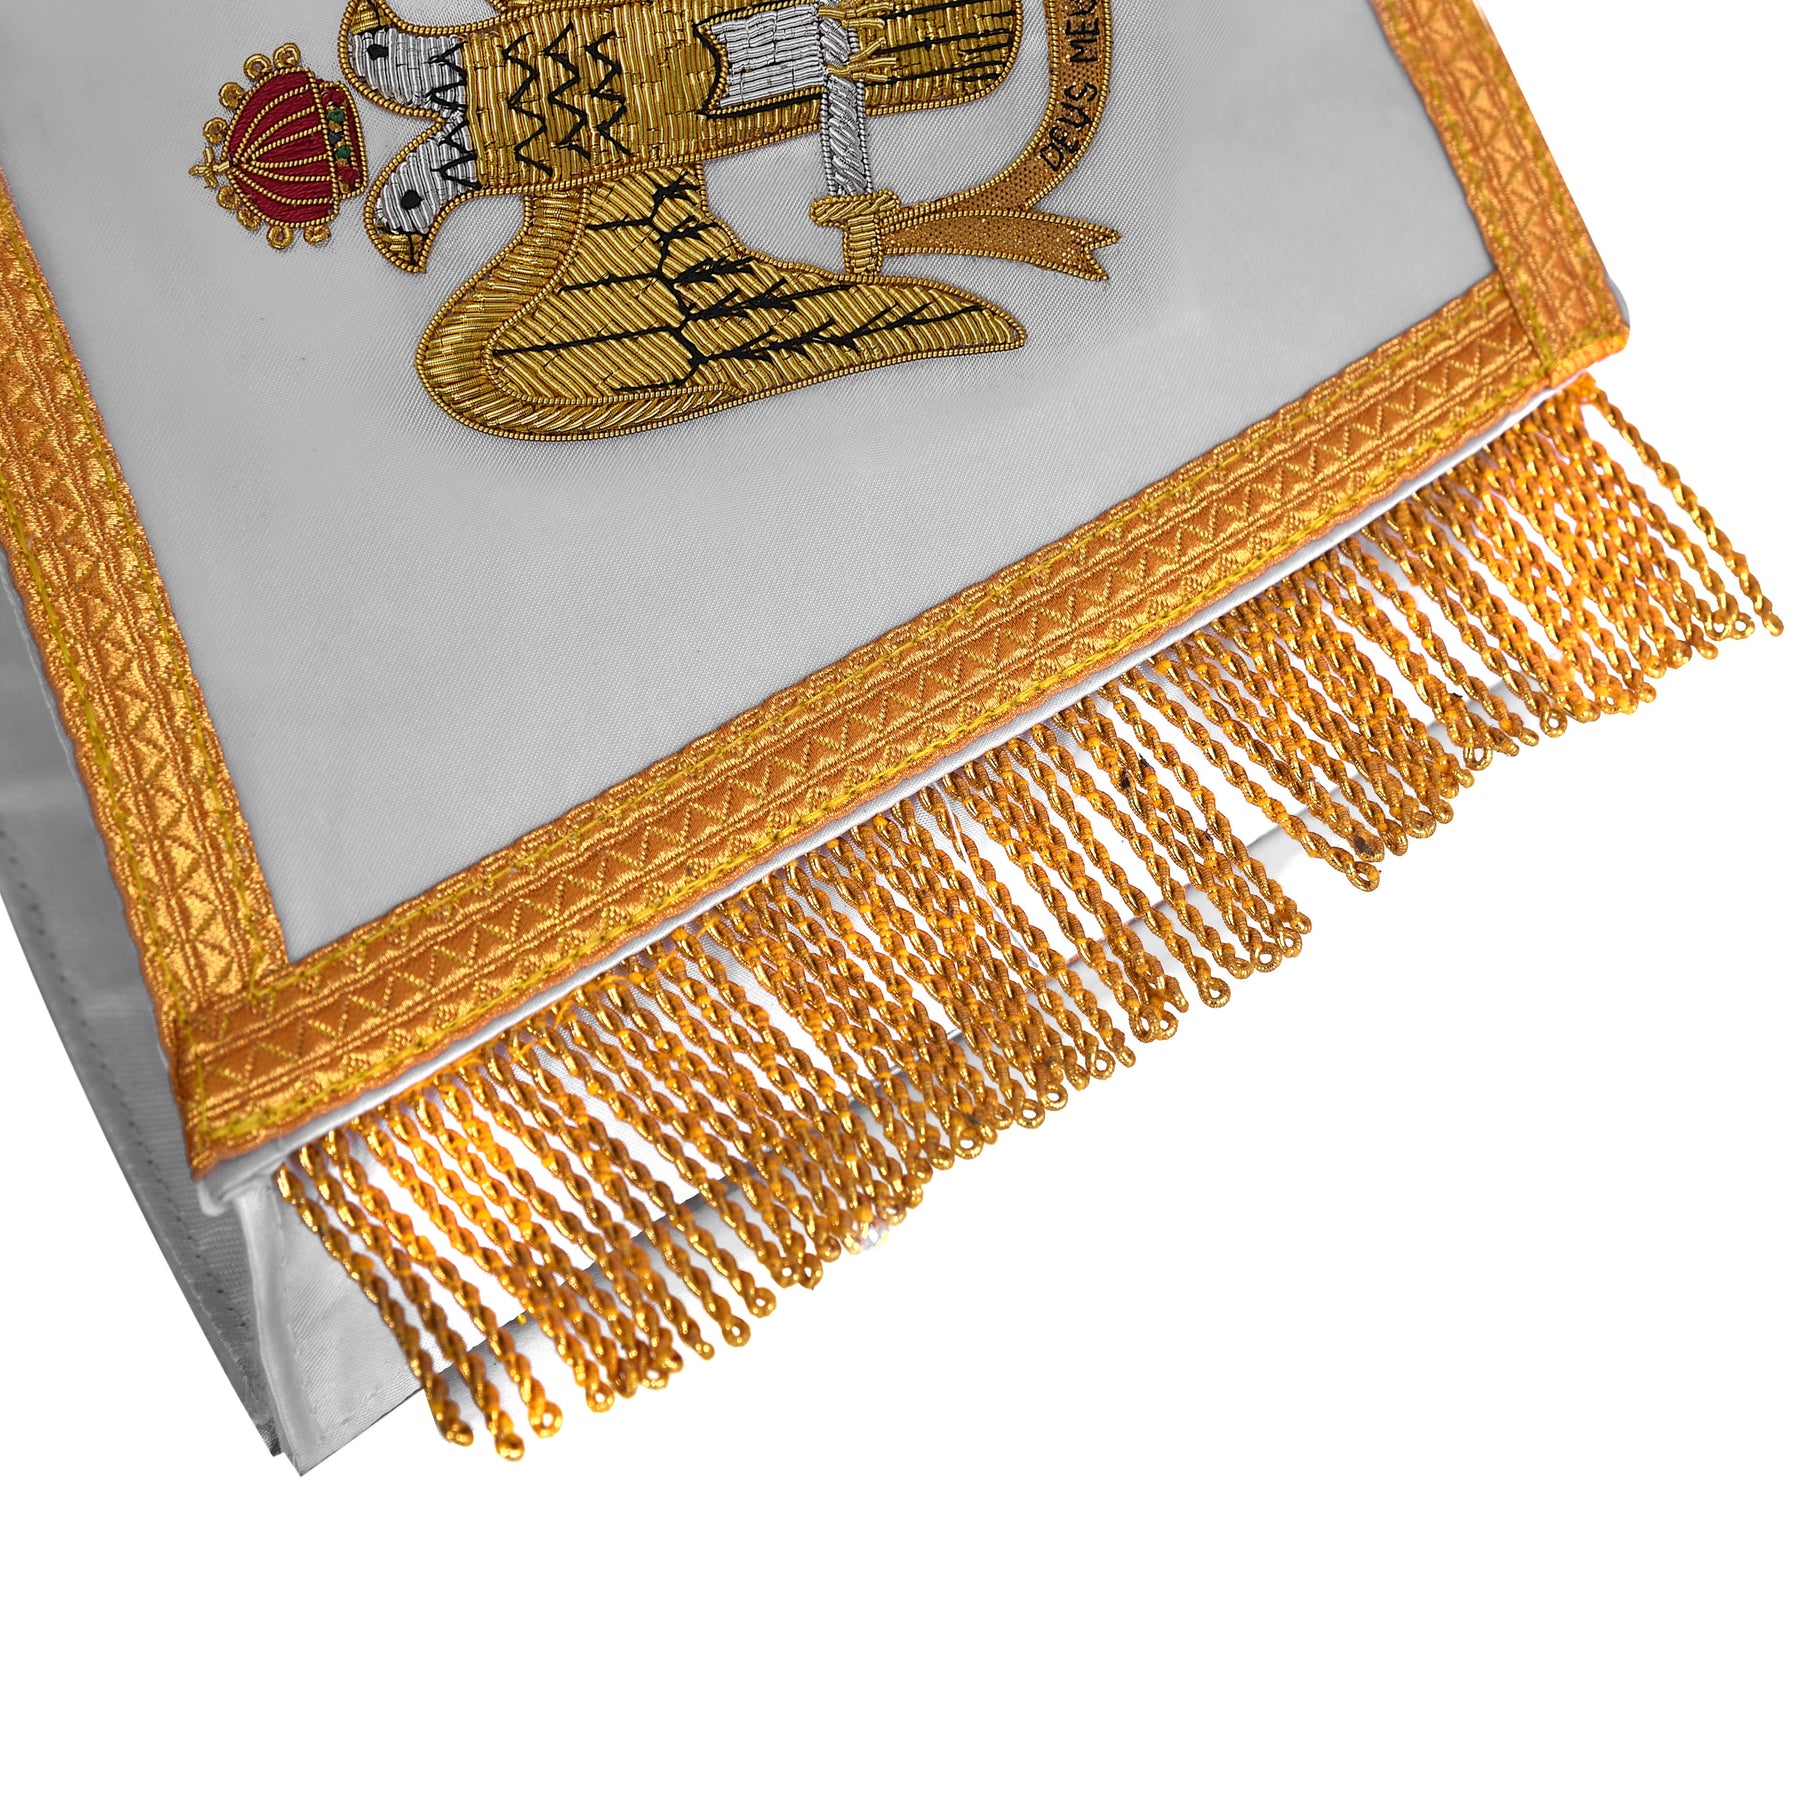 33rd Degree Scottish Rite Cuff - White Silk with Hand Embroidery Gold Bullion - Bricks Masons